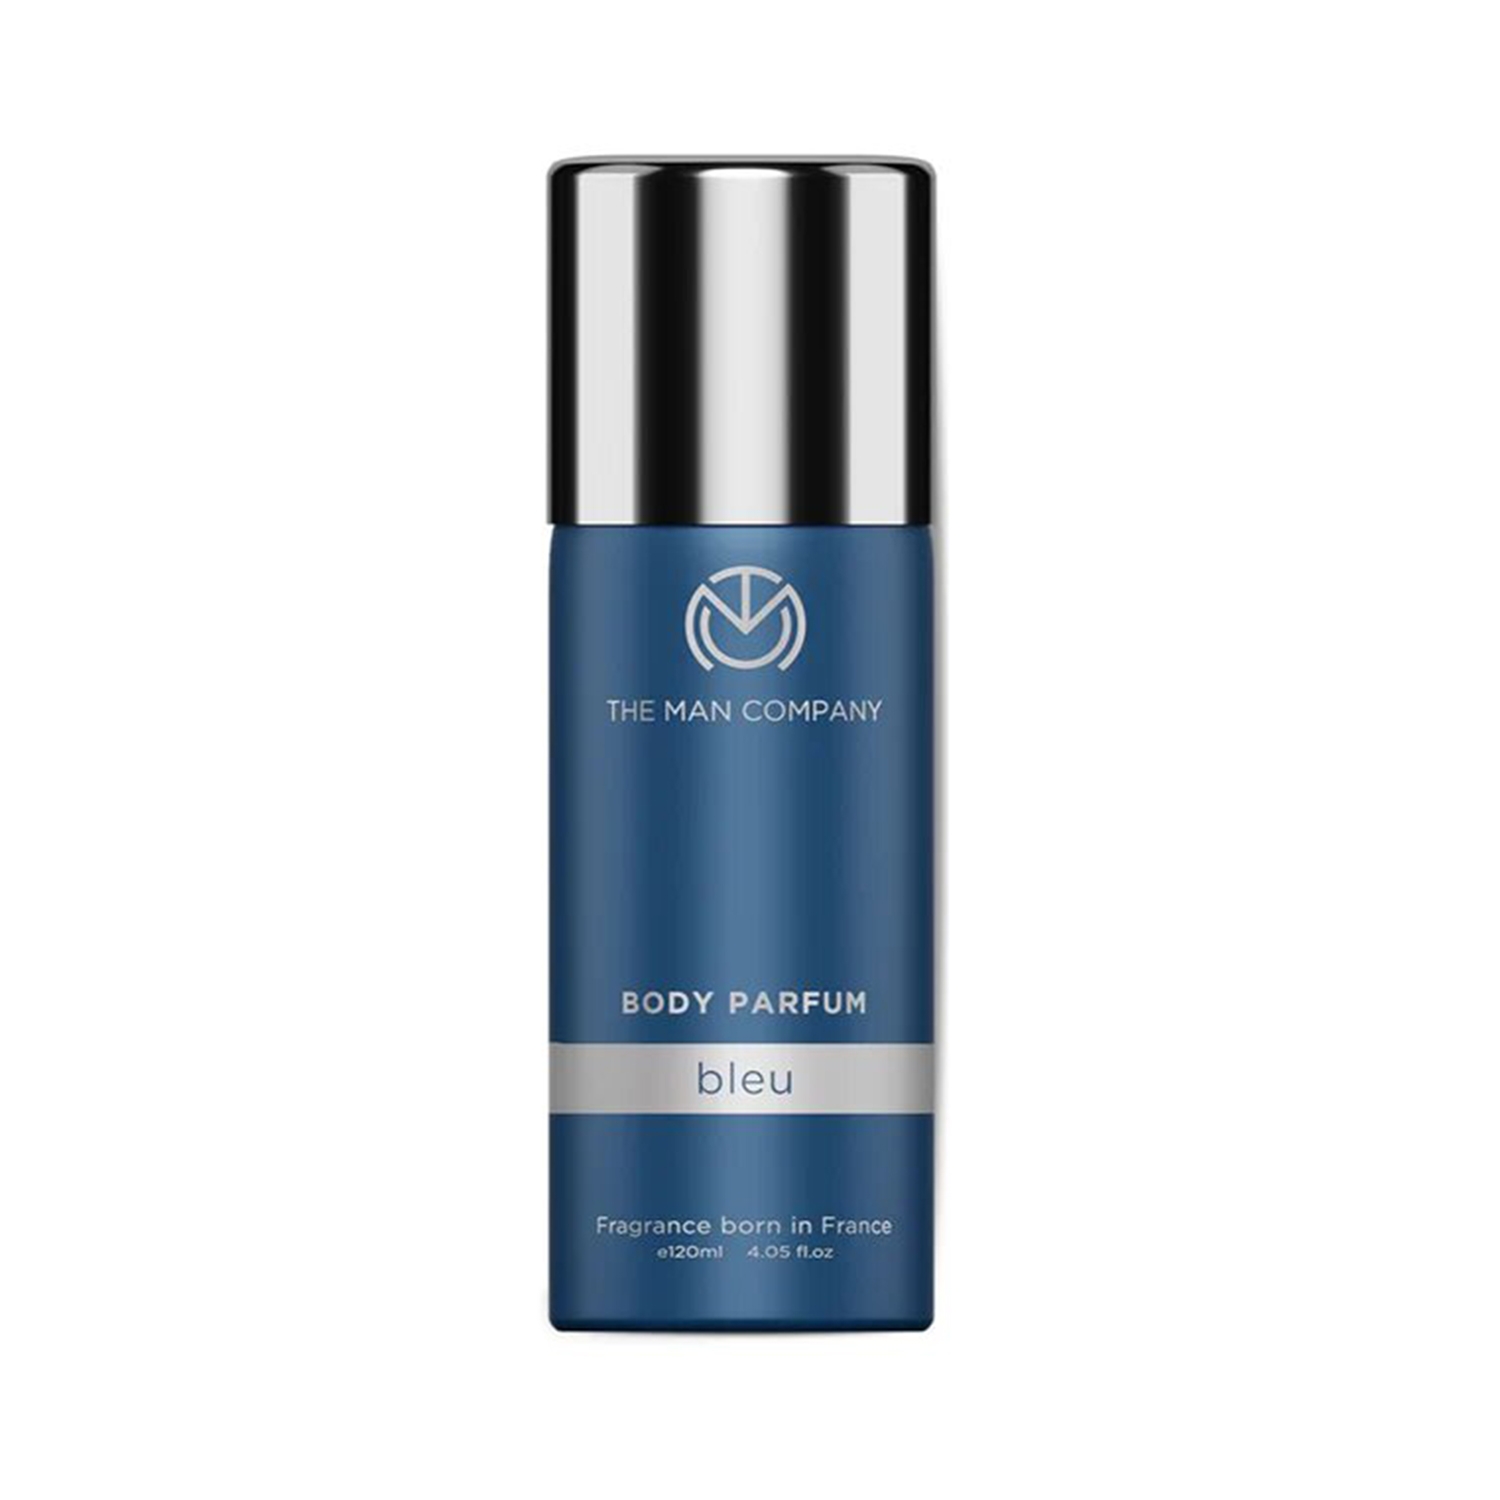 The Man Company | The Man Company Bleu Body Parfum Deodorant Spray (120ml)